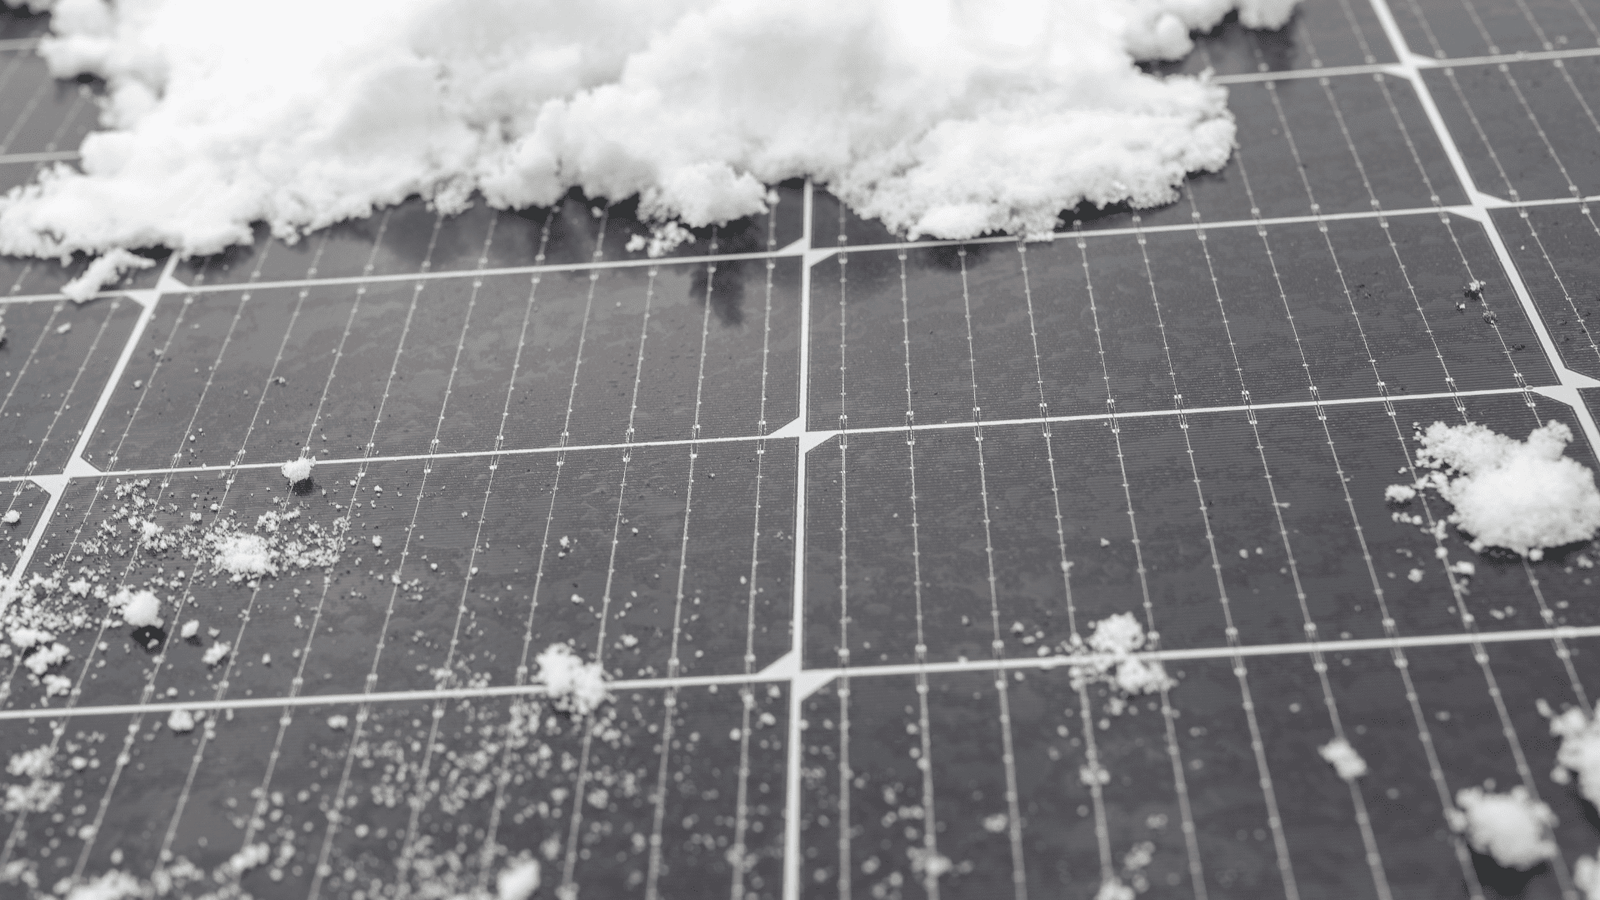 Do Solar Panels Work In The Winter